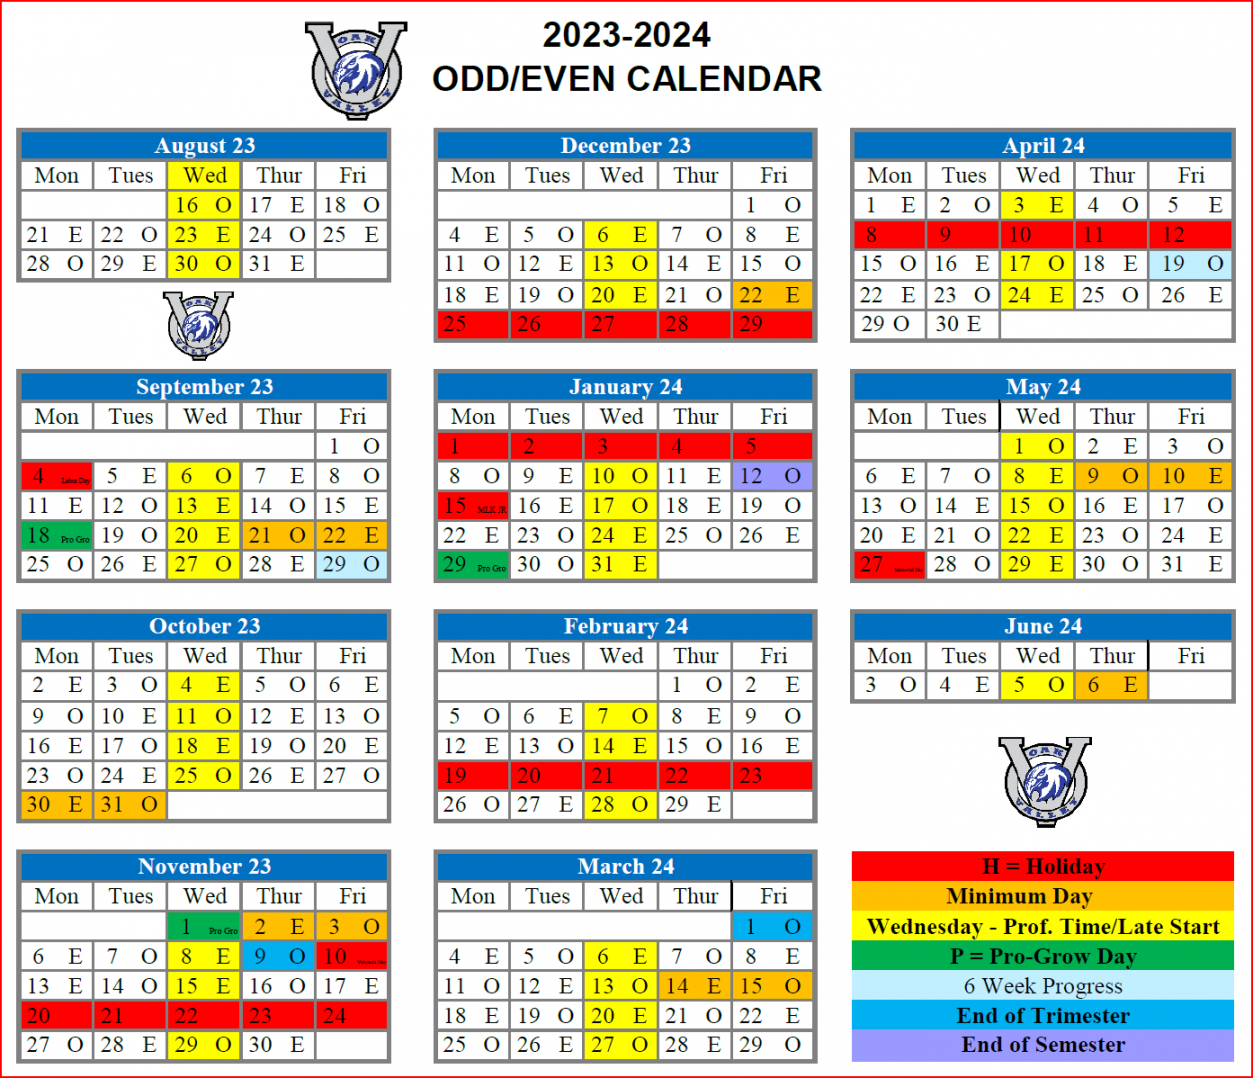 Odd/Even Calendar - Calendar - OAK VALLEY MIDDLE SCHOOL